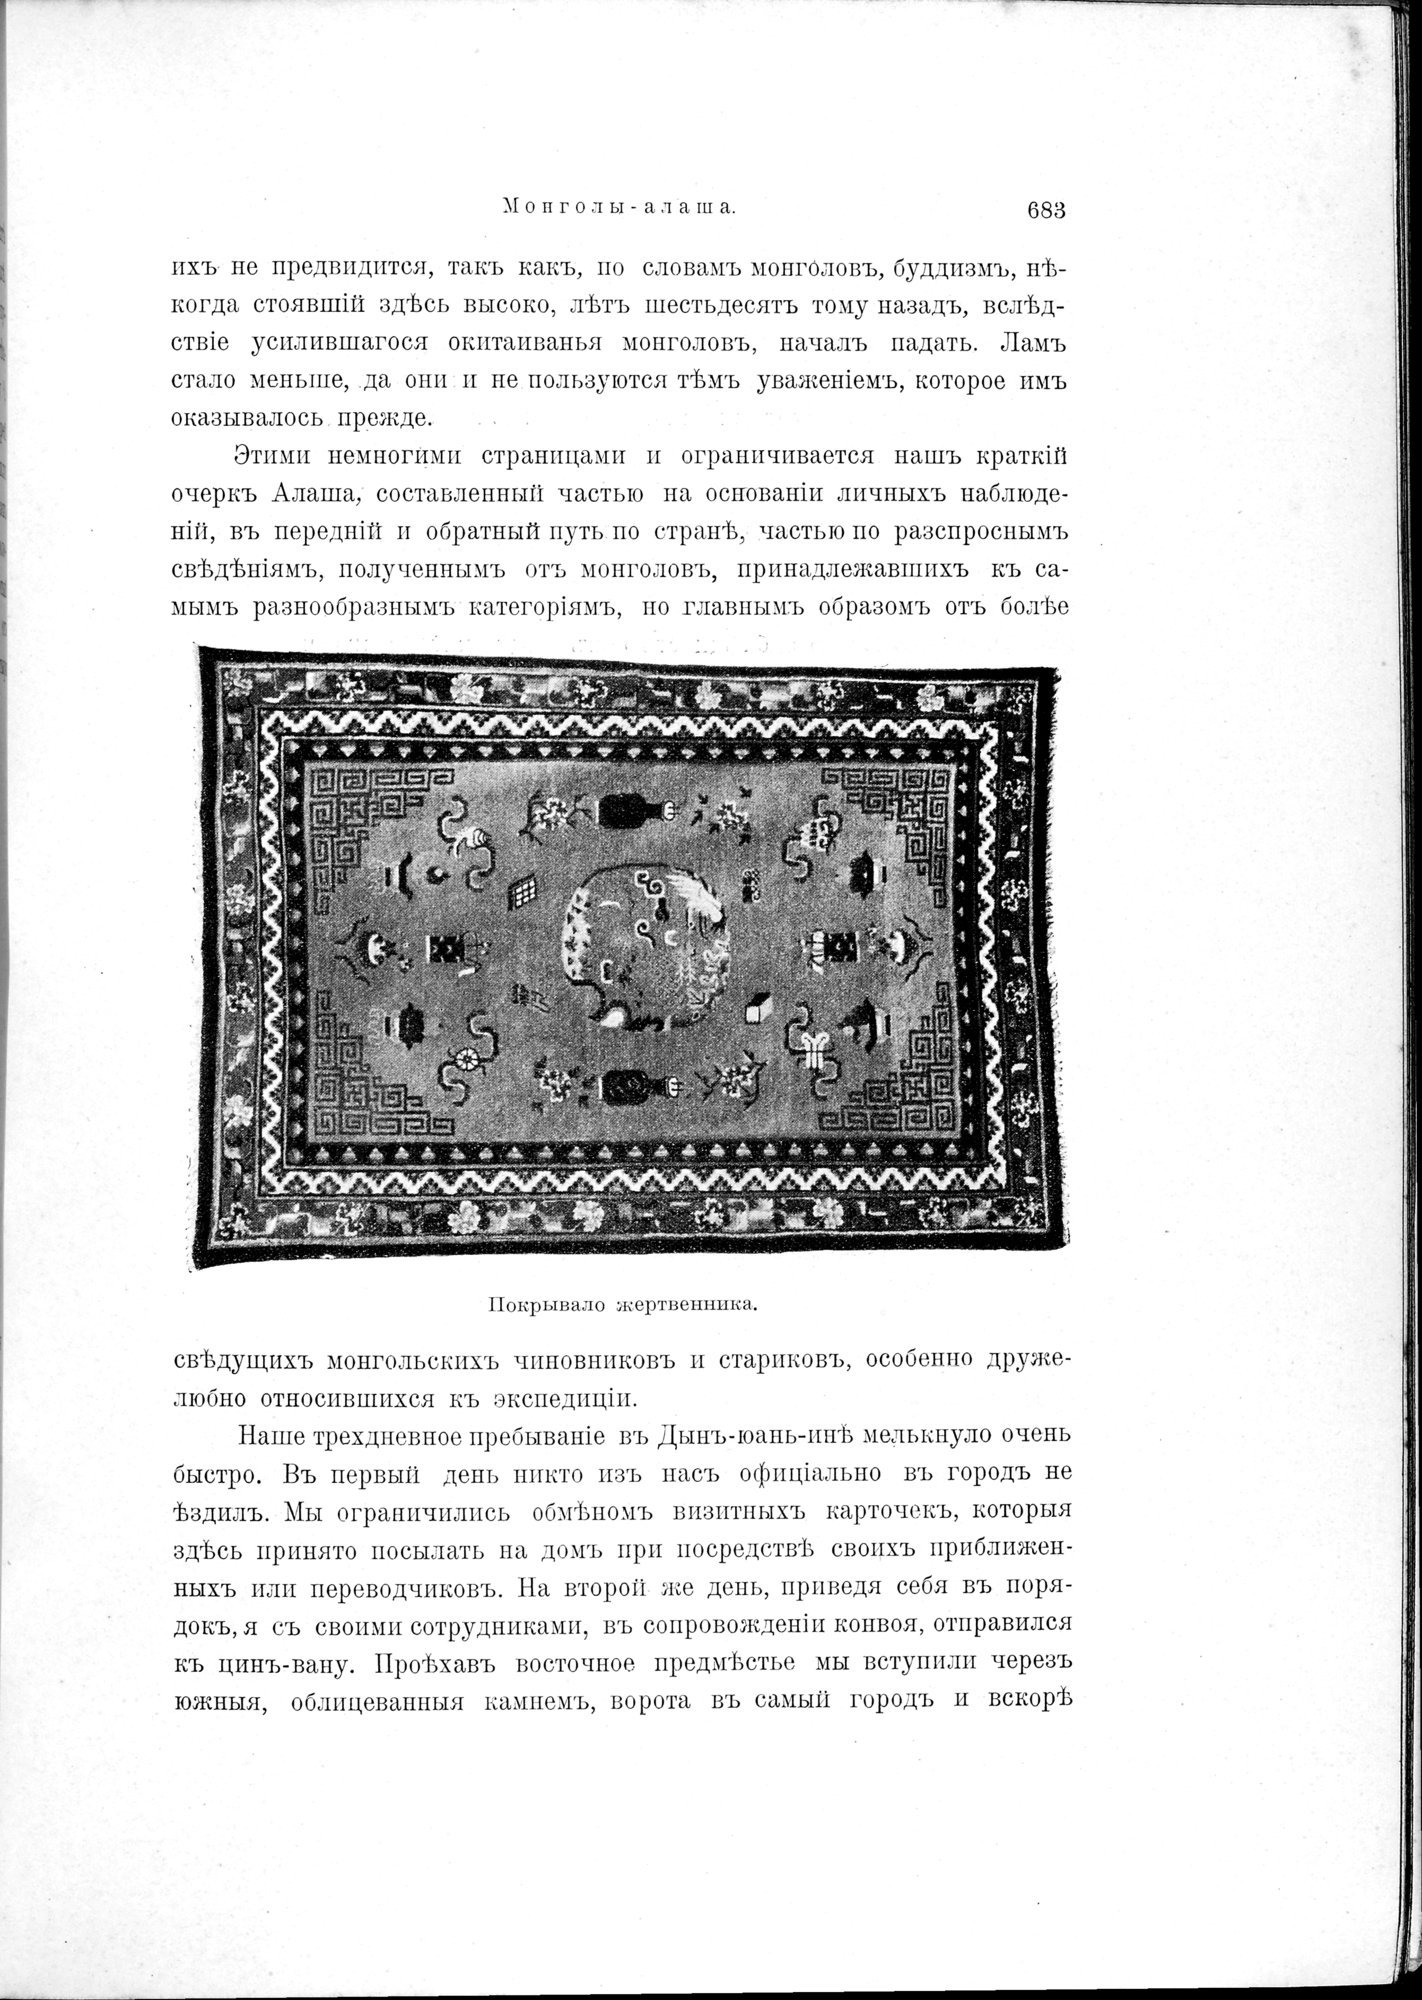 Mongoliia i Kam : vol.2 / Page 517 (Grayscale High Resolution Image)